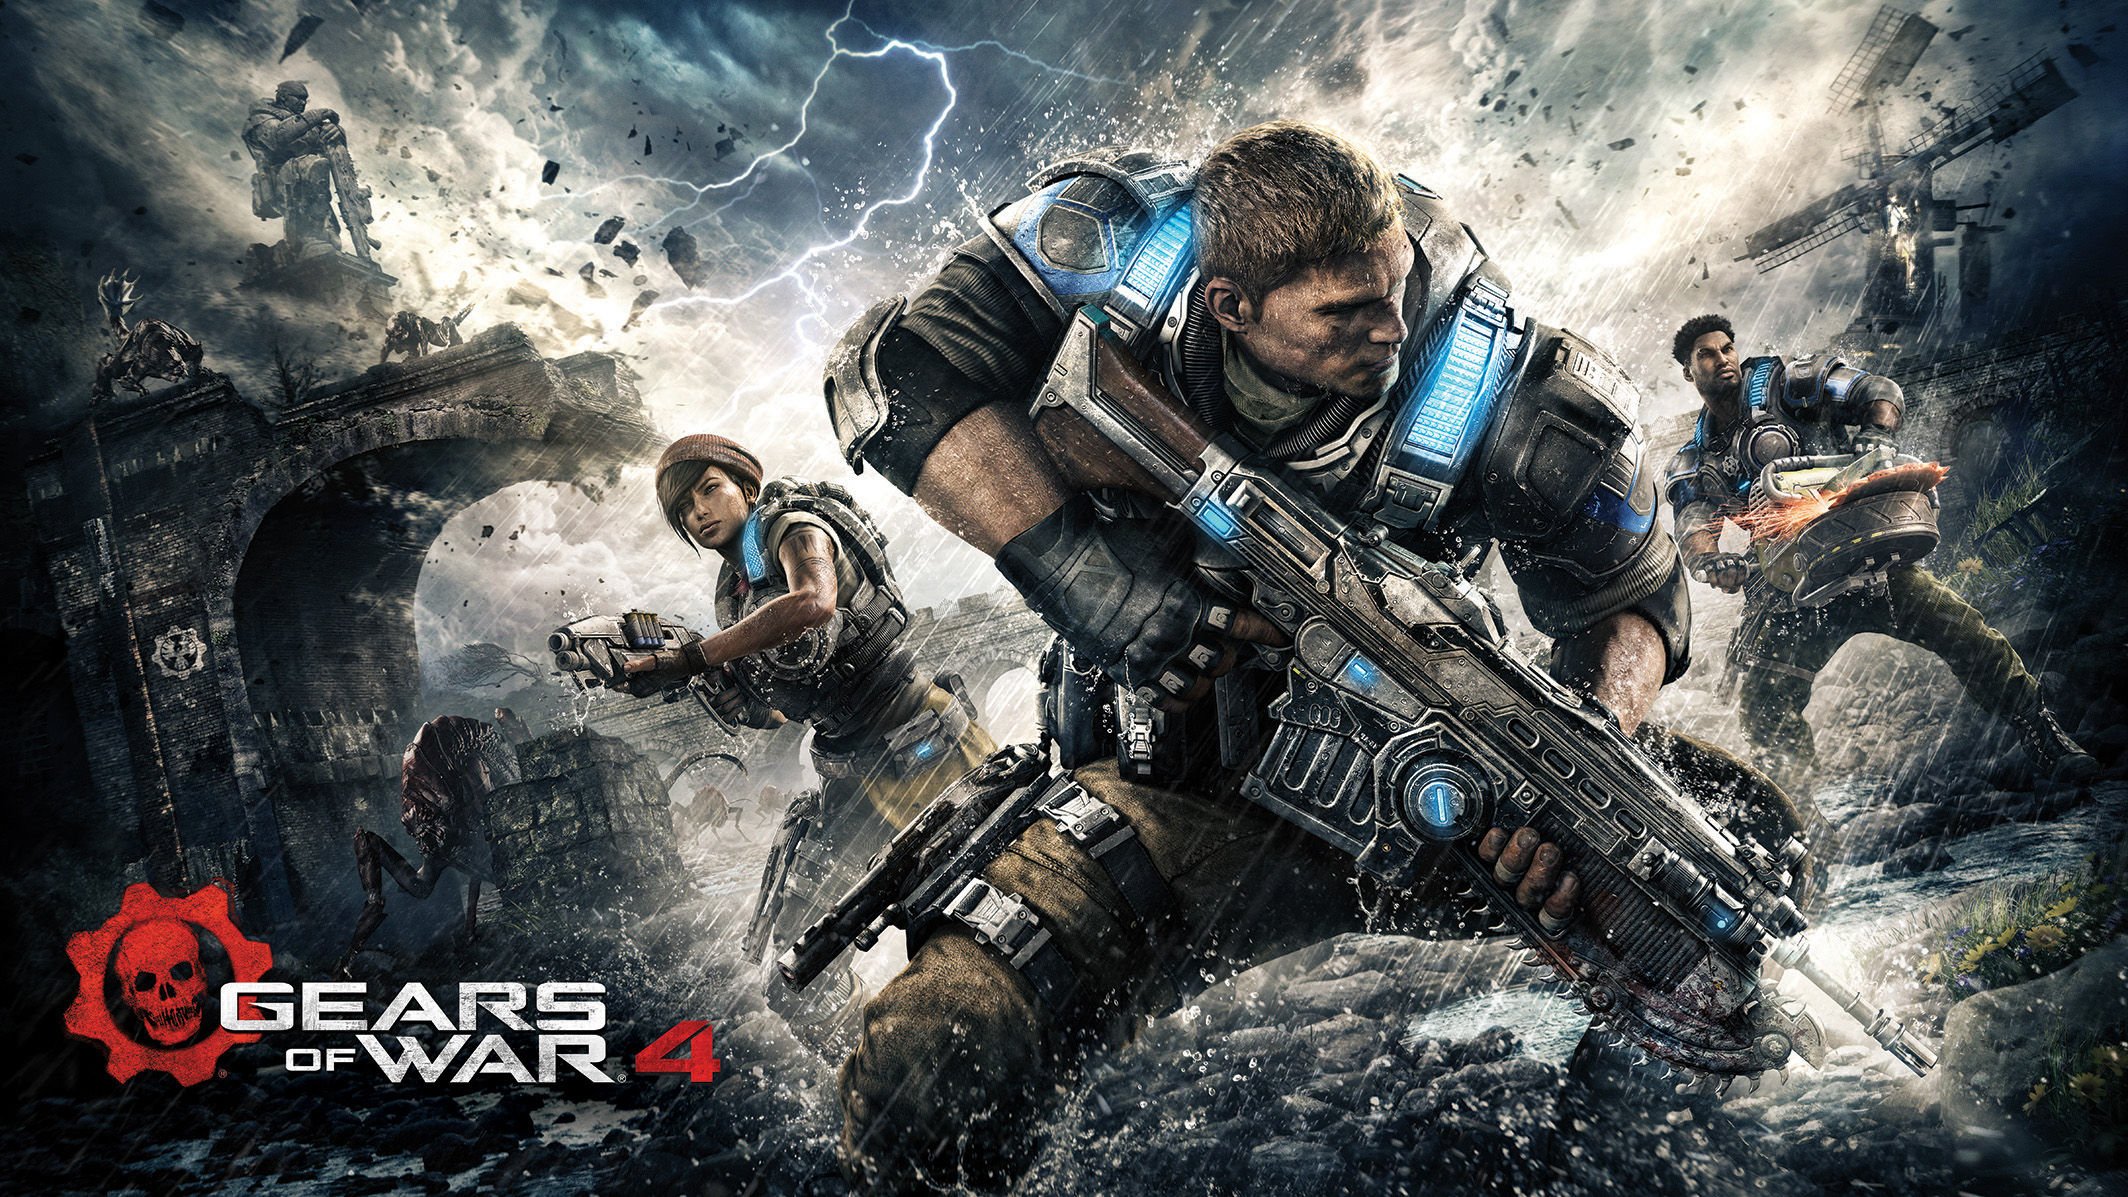 Реализовано 27 млн. копий игр серии Gears of War